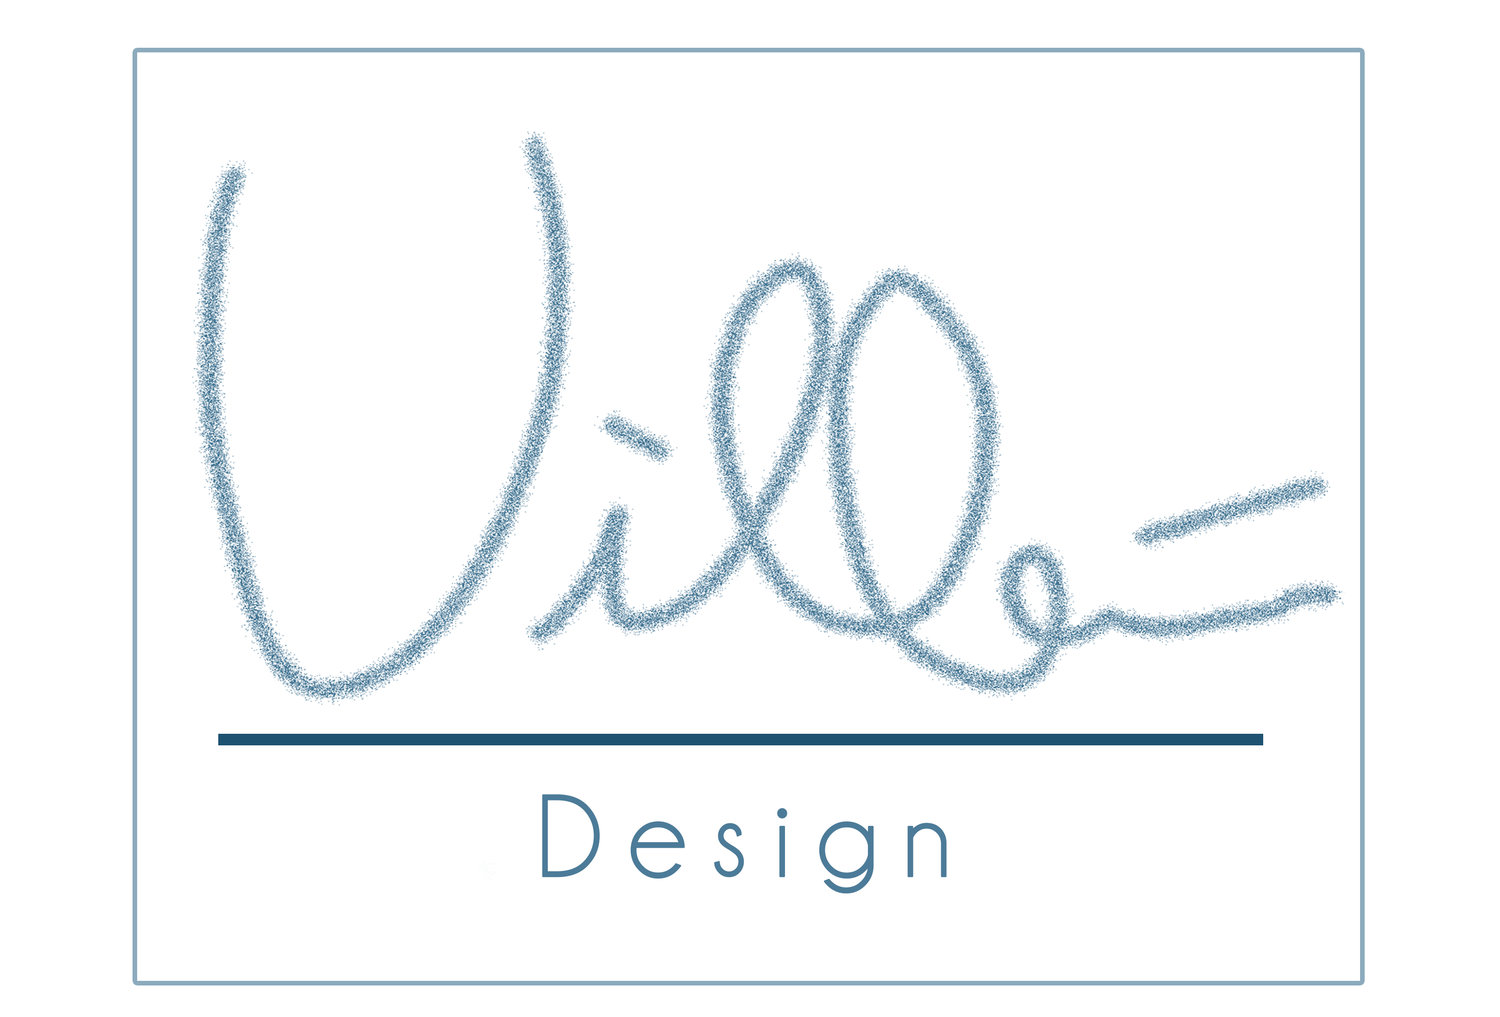 Villere Design